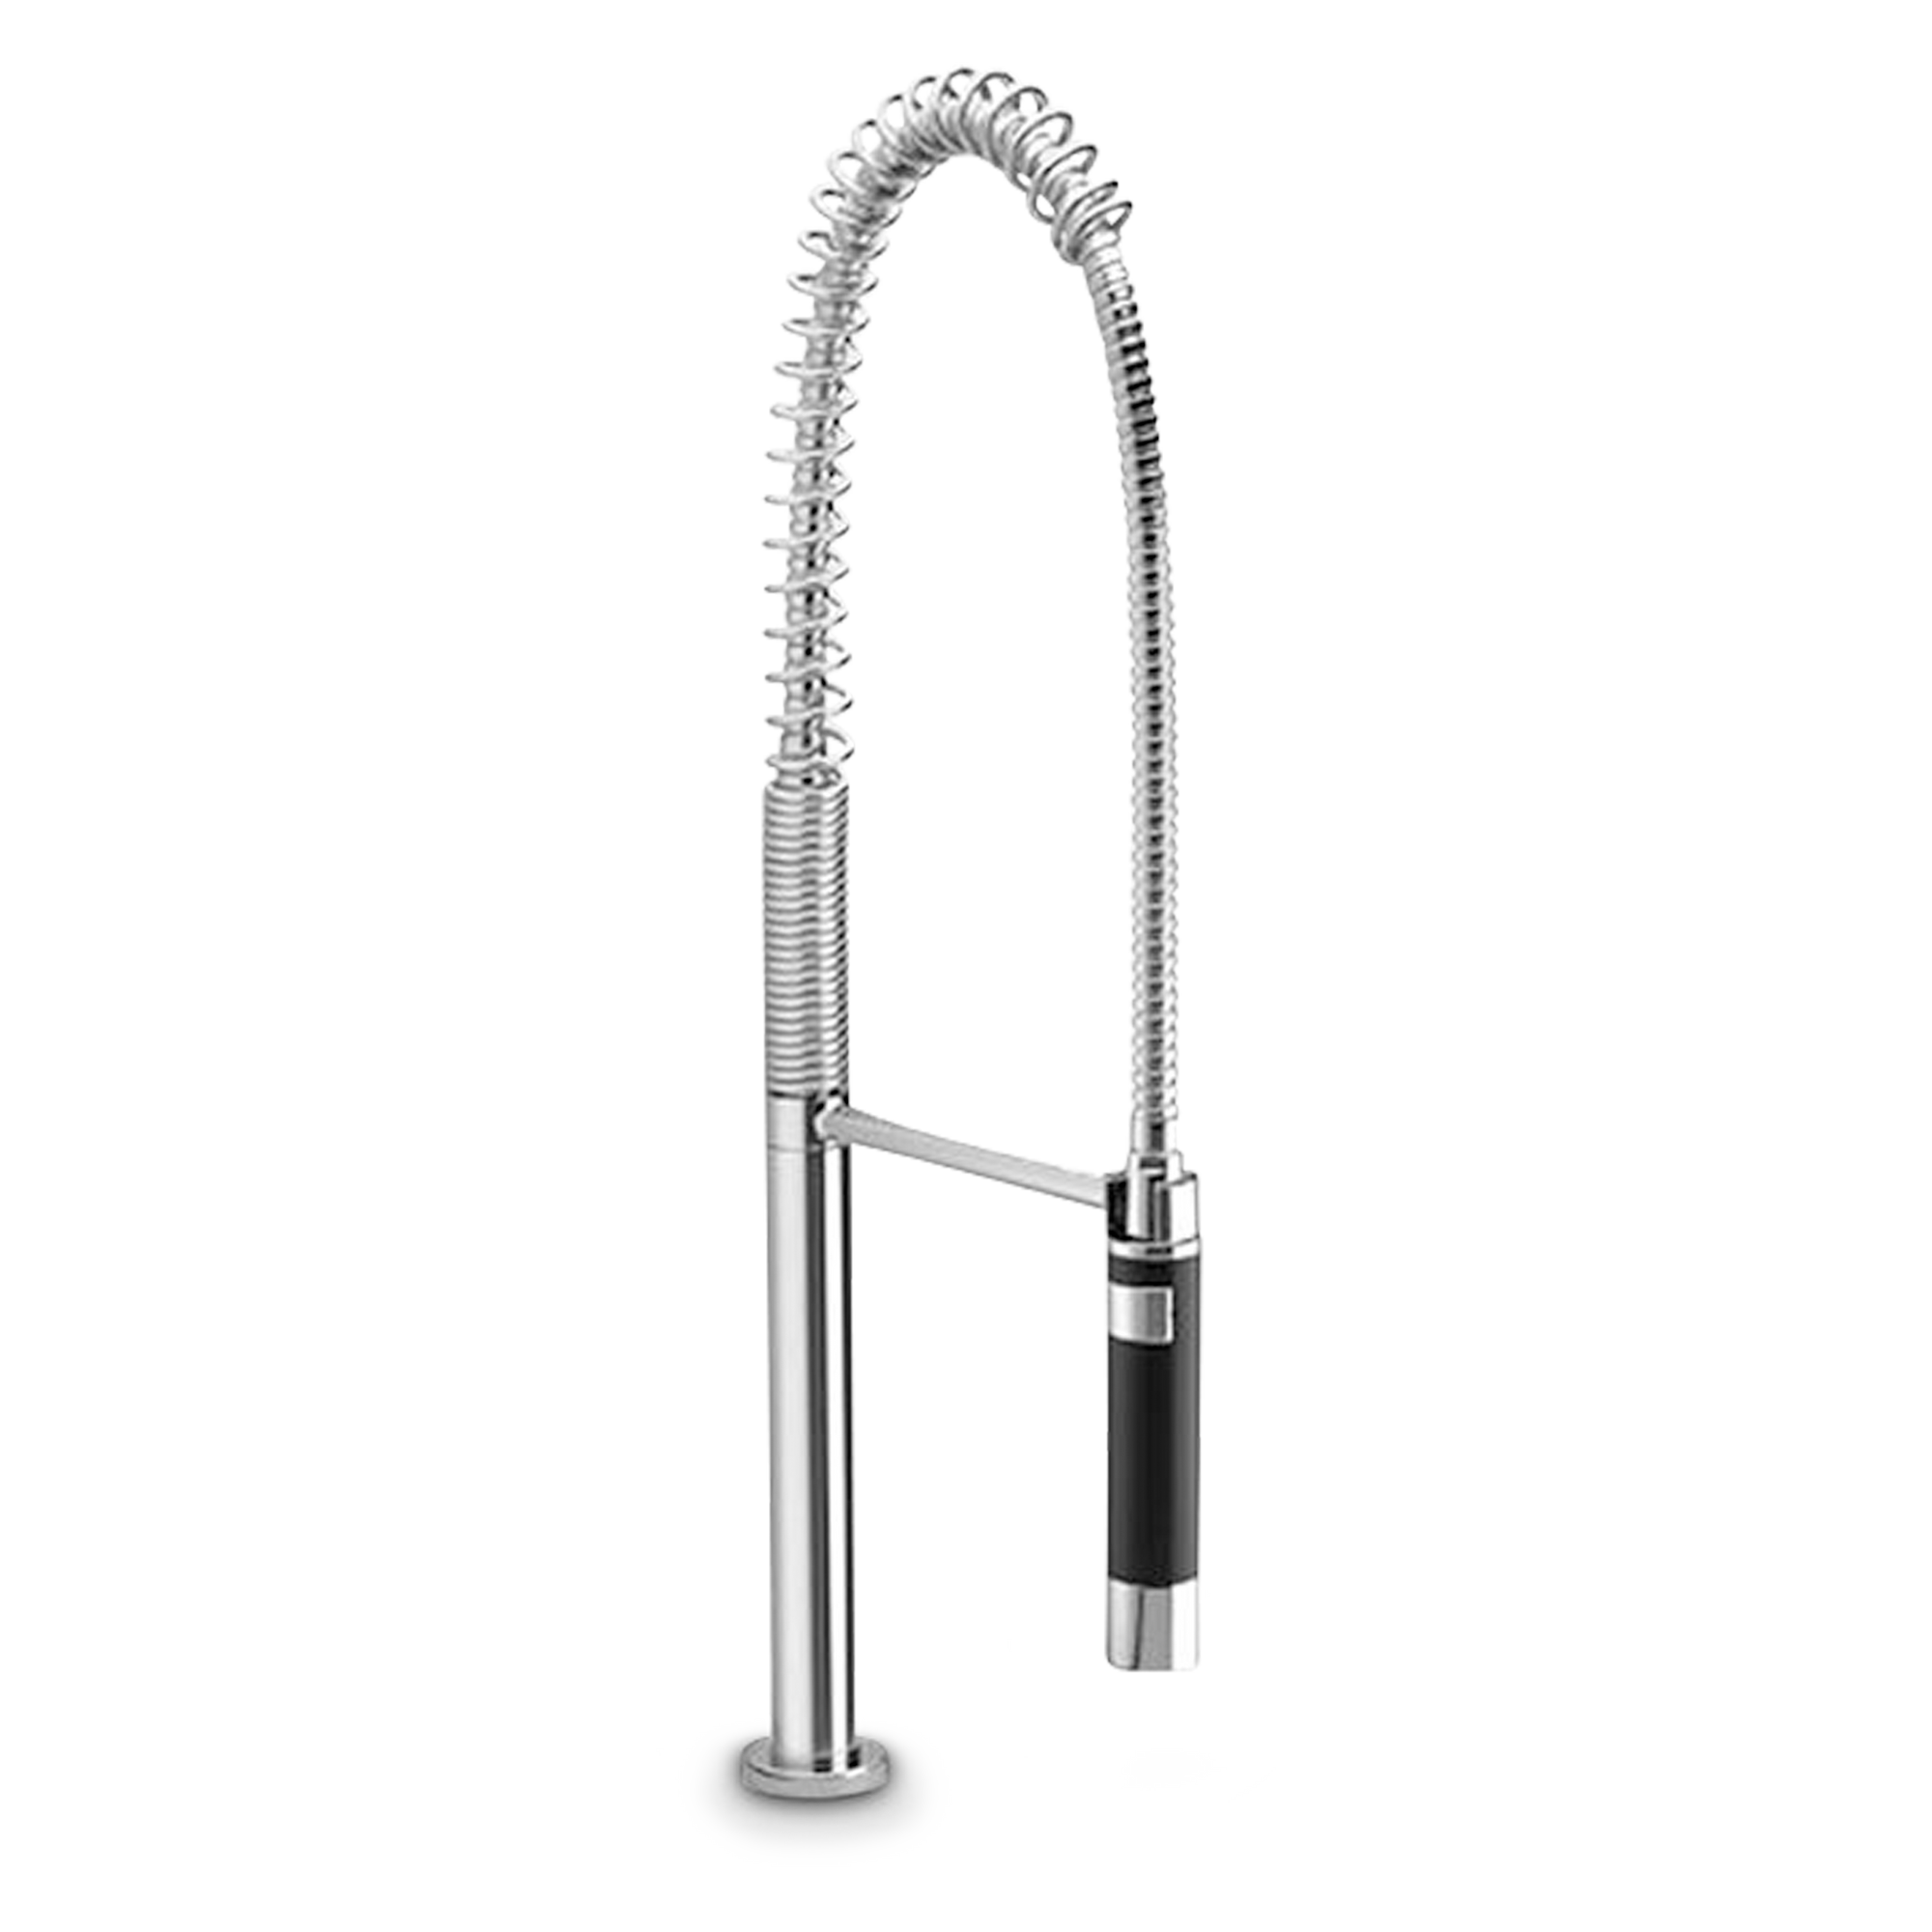 A sleek, modern profi spray faucet featuring a 360 degree swivel spout.